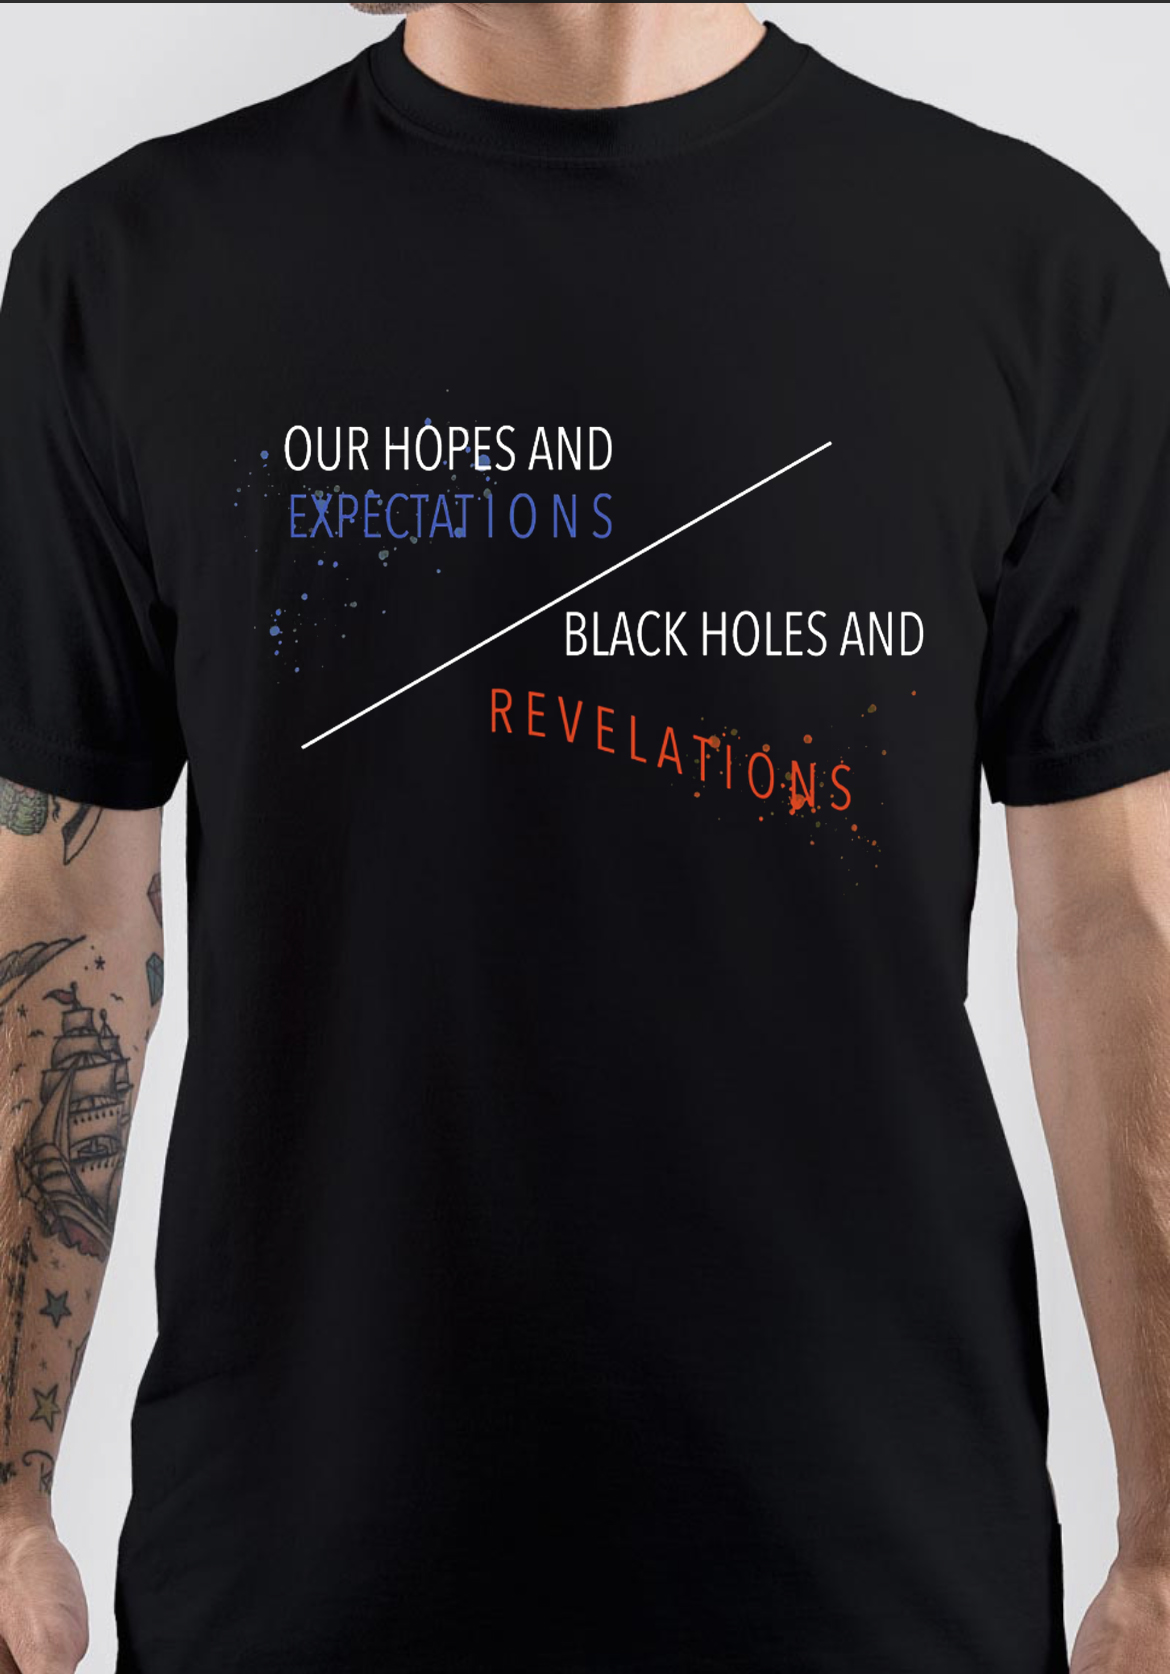 Black Holes T-Shirt And Merchandise